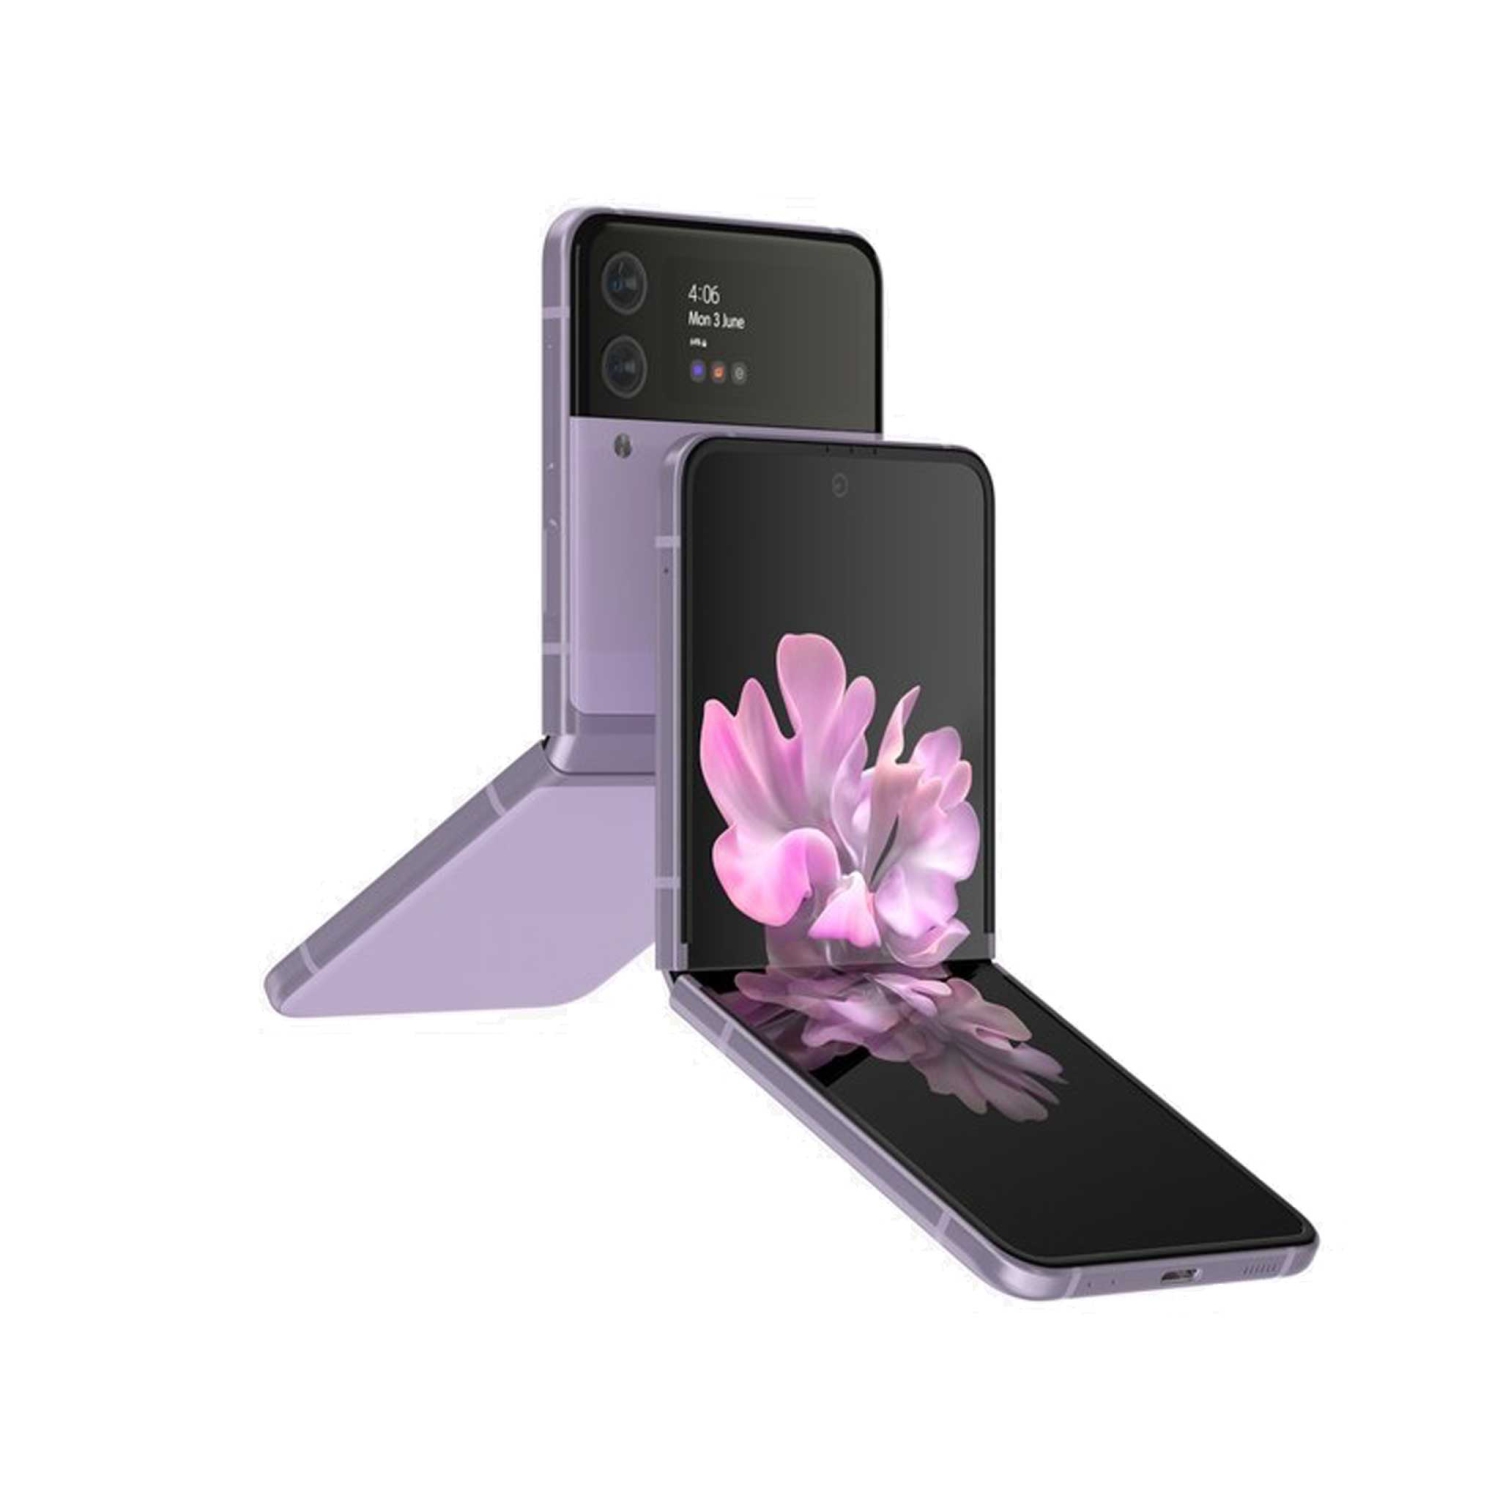 Samsung Galaxy Z Flip 3 5G - 128GB - Lavender - Open Box